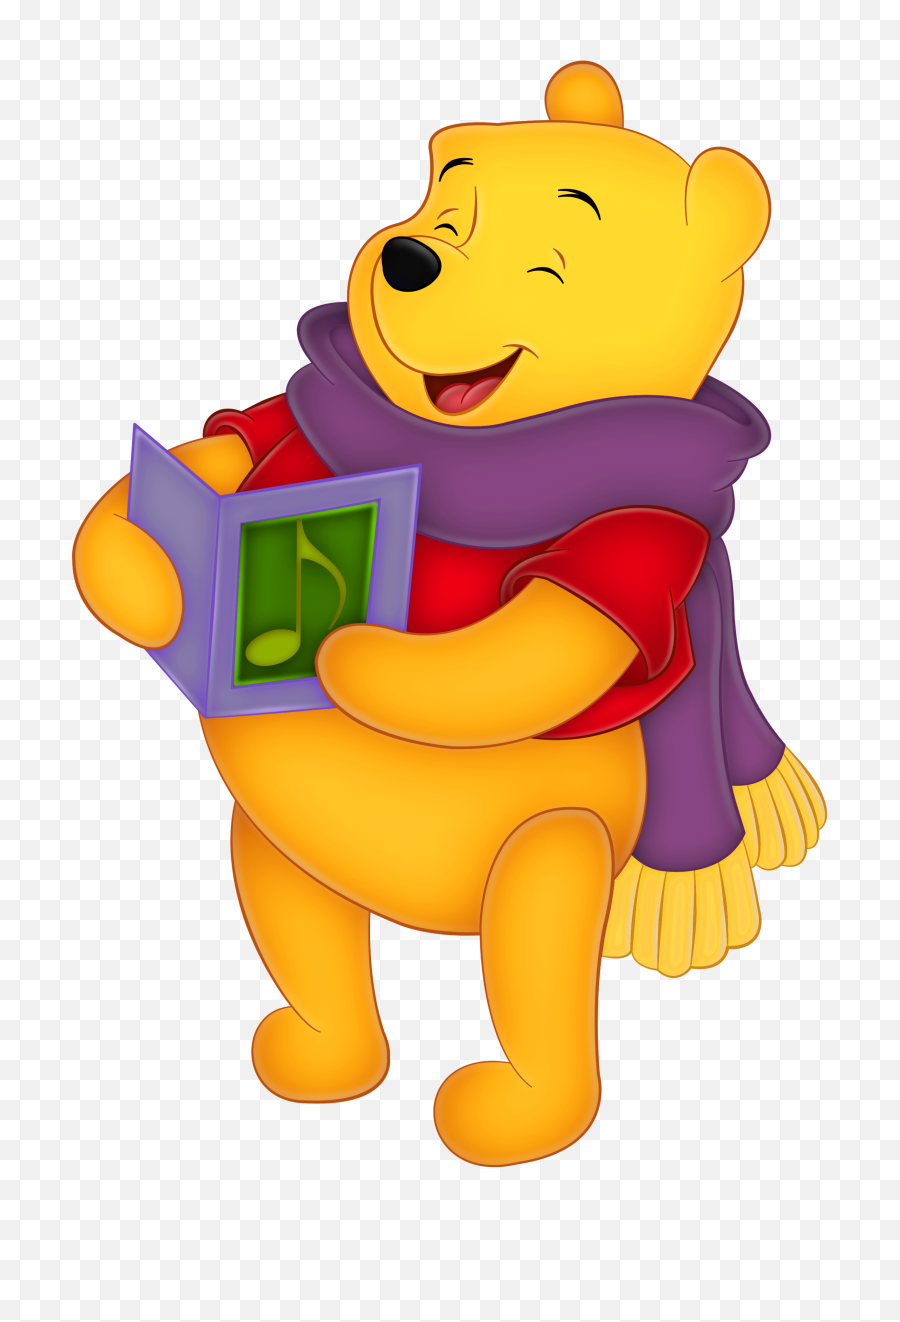 Download Winnie The Pooh Png Image - Winnie The Pooh Purple,Pooh Png